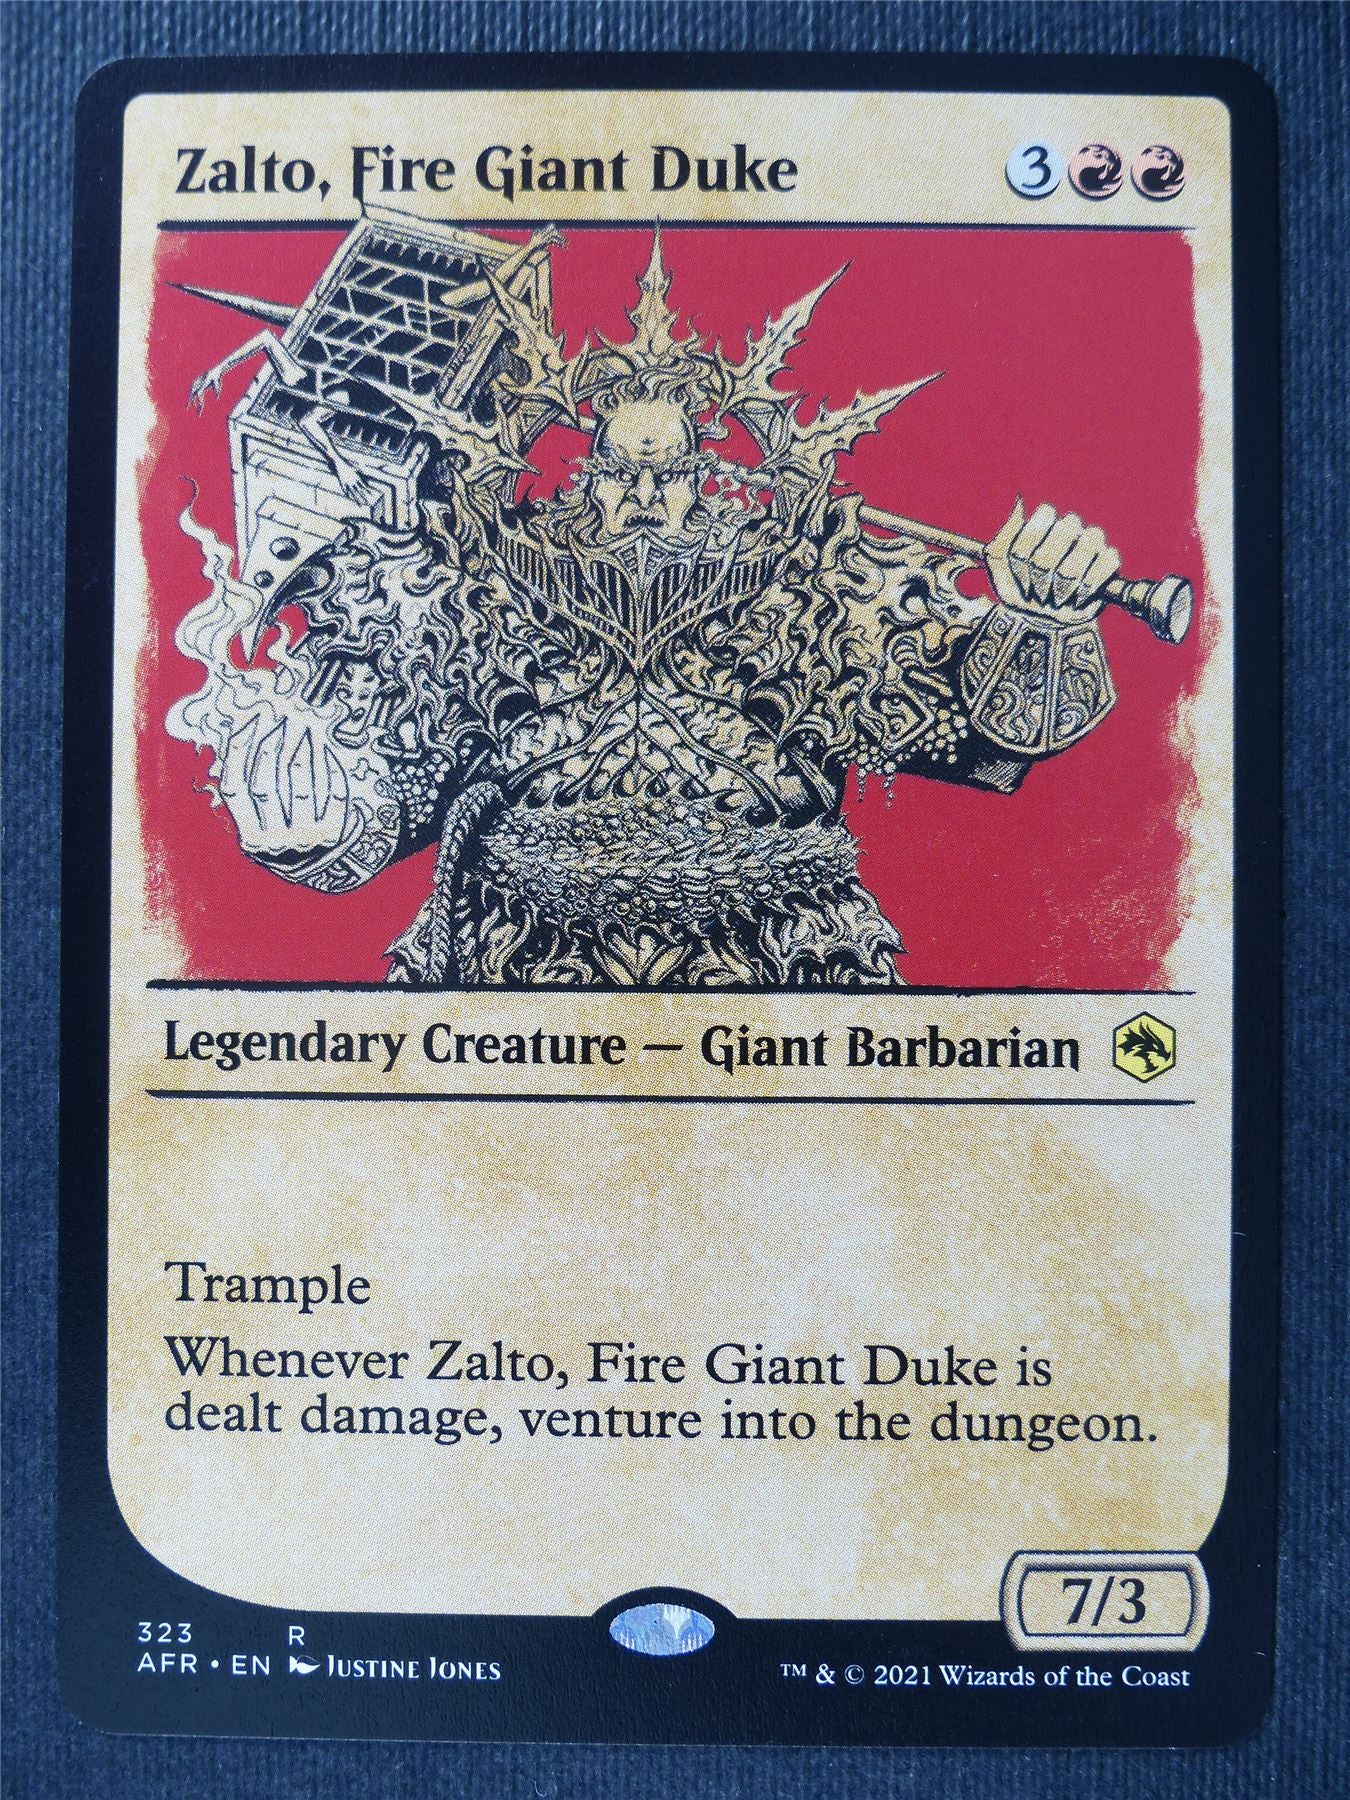 Zalto Fire Giant Duke module art - AFR - Mtg Card #2B6